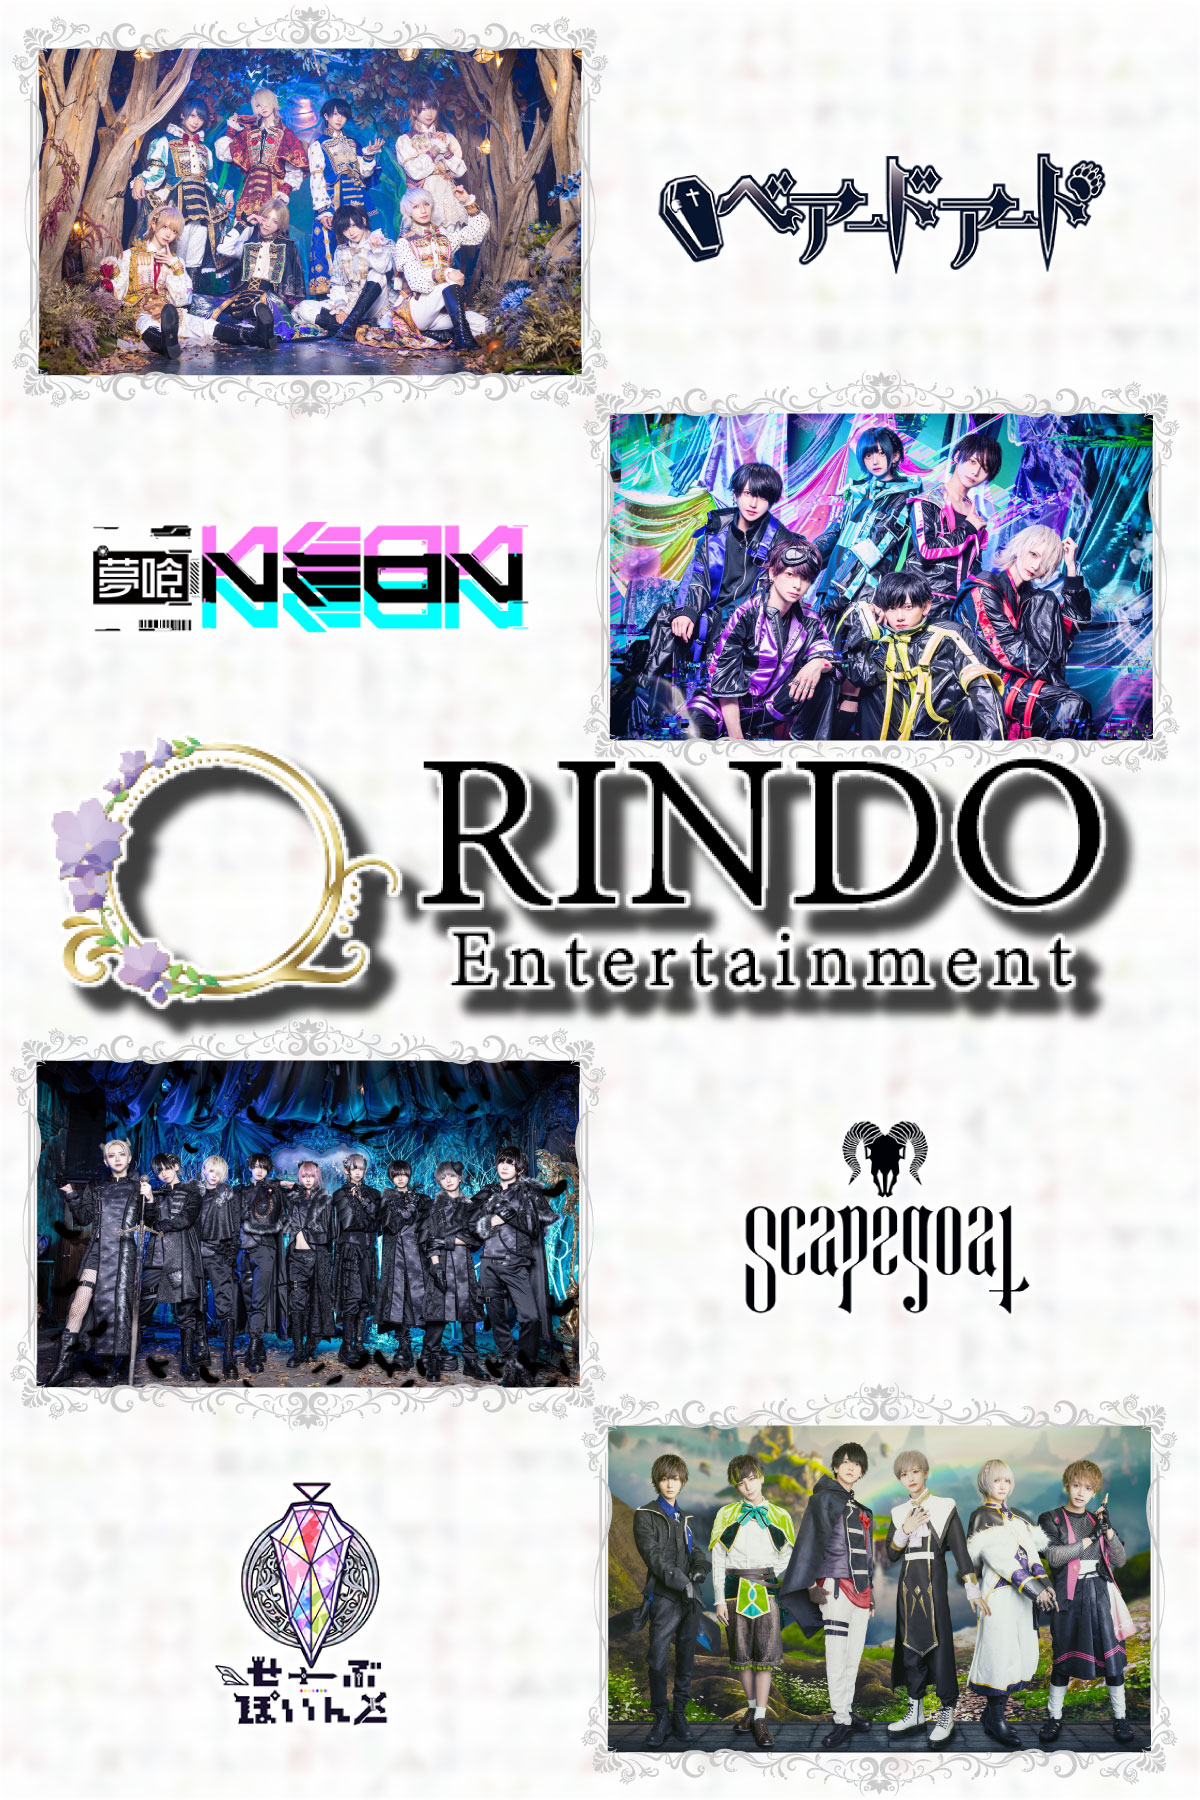 RINDO Entertainment